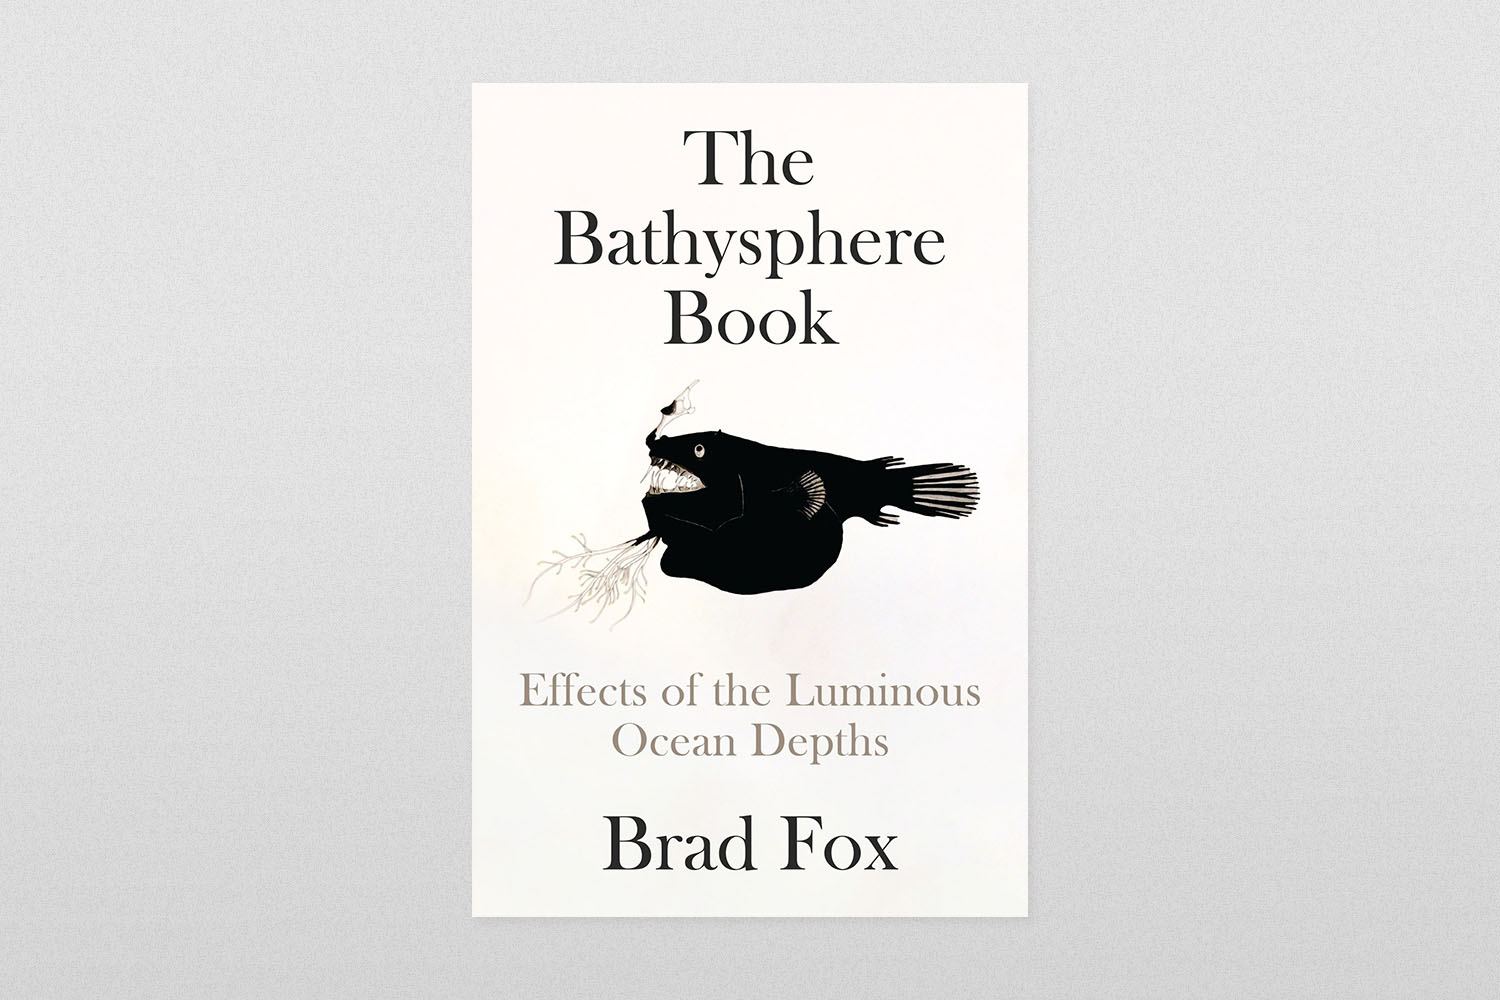 The Bathysphere Book- Effects of the Luminous Ocean Depths by Brad Fox